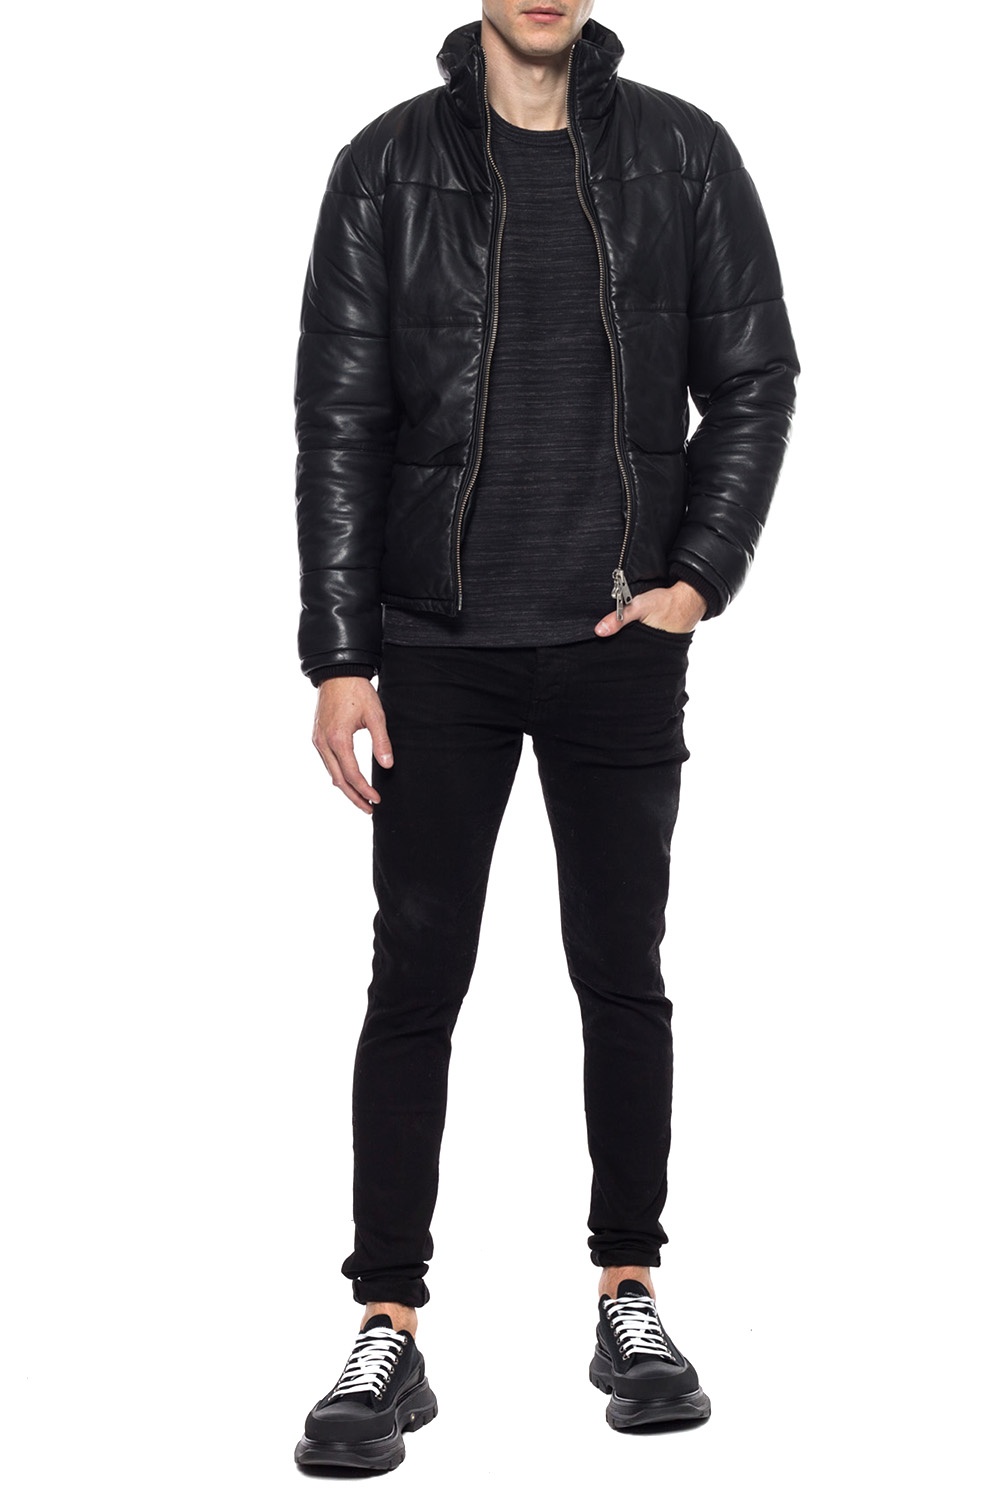 AllSaints 'Coronet' leather jacket   Men's Clothing   Vitkac